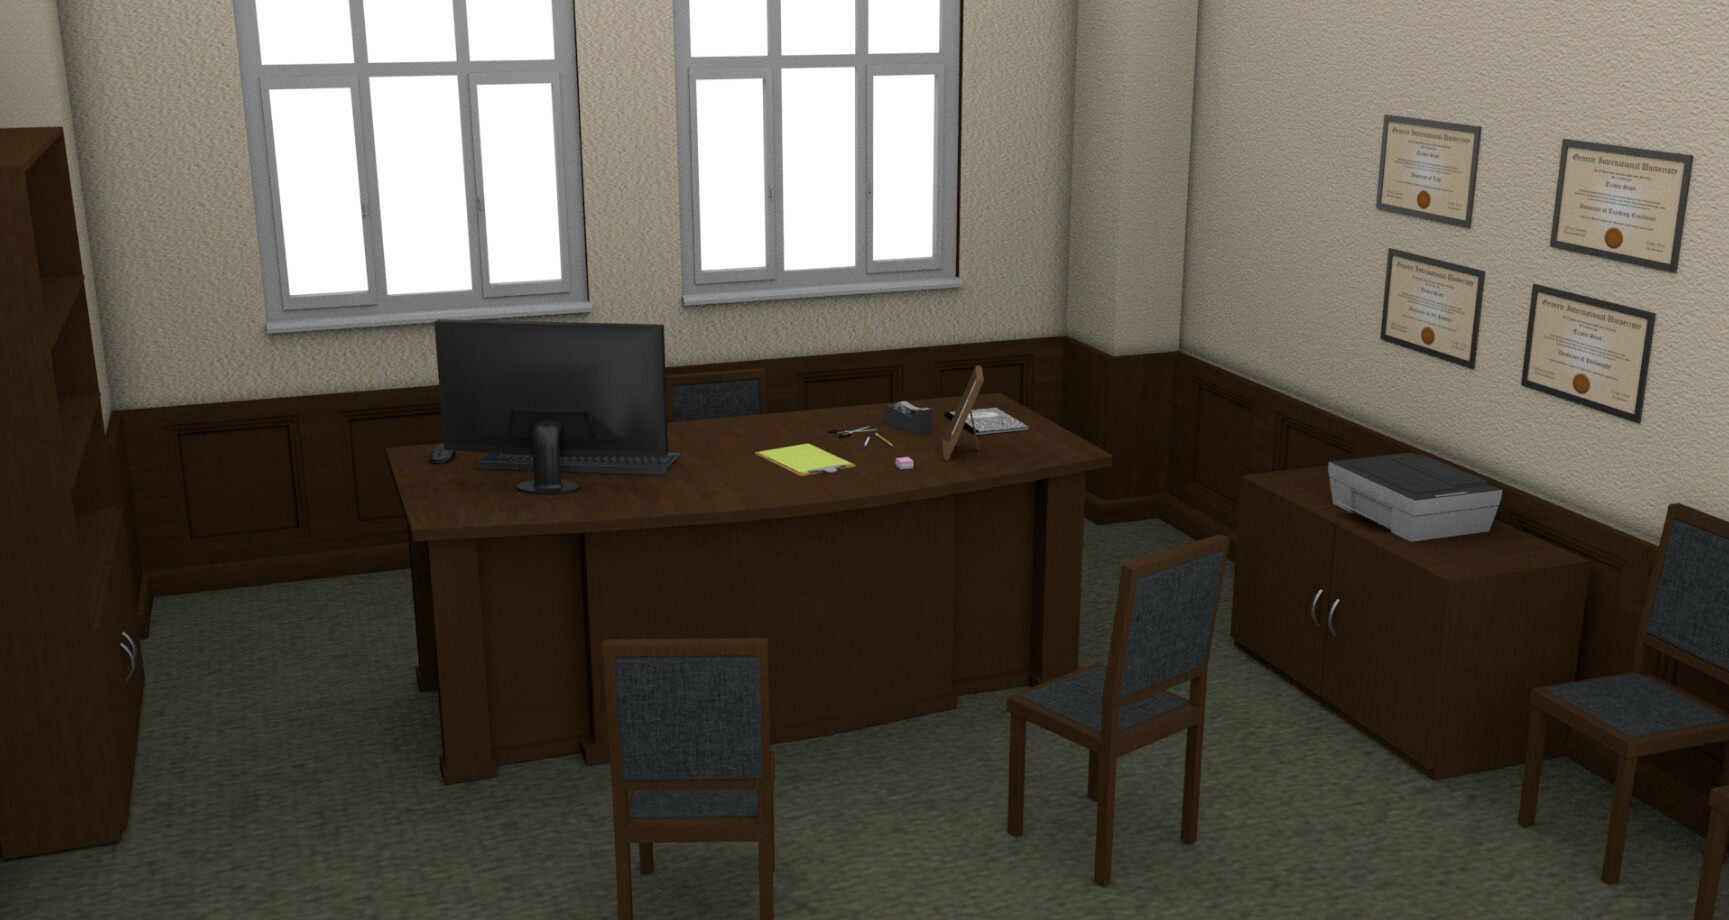 ArtStation - The Principal's Office